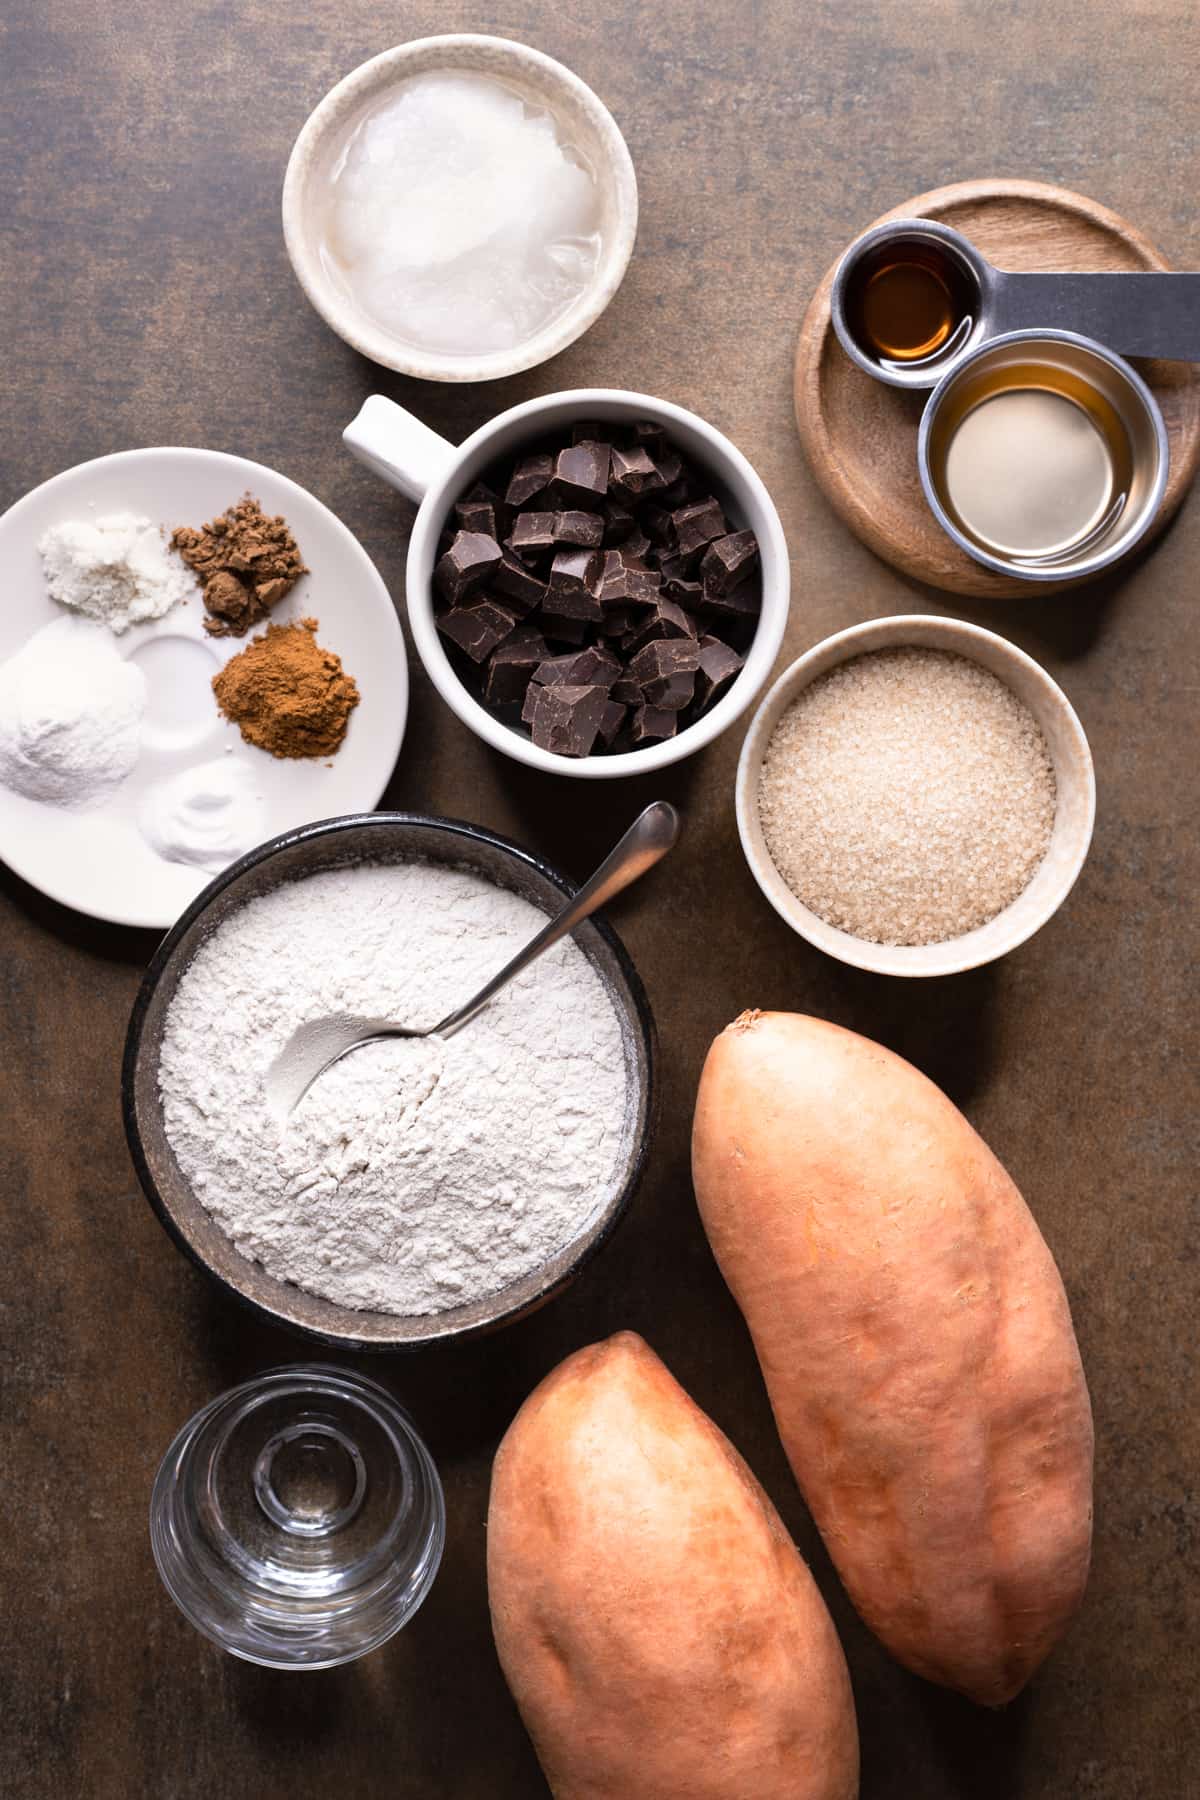 Ingredients for gluten free and vegan sweet potato bread